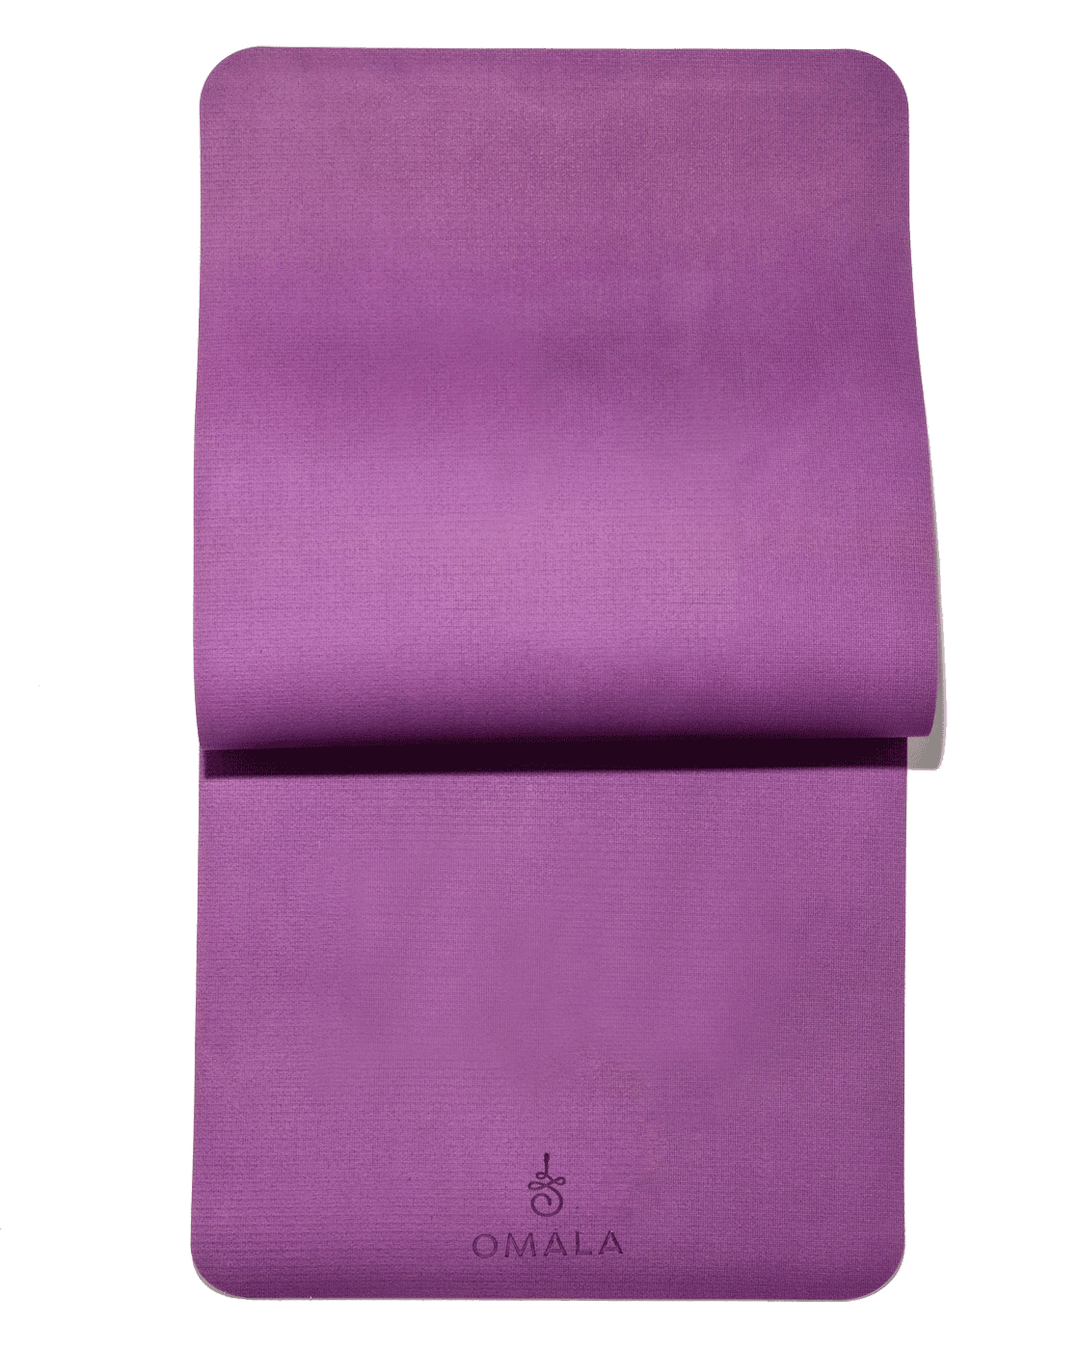 Aurora Color-Changing Yoga Mat